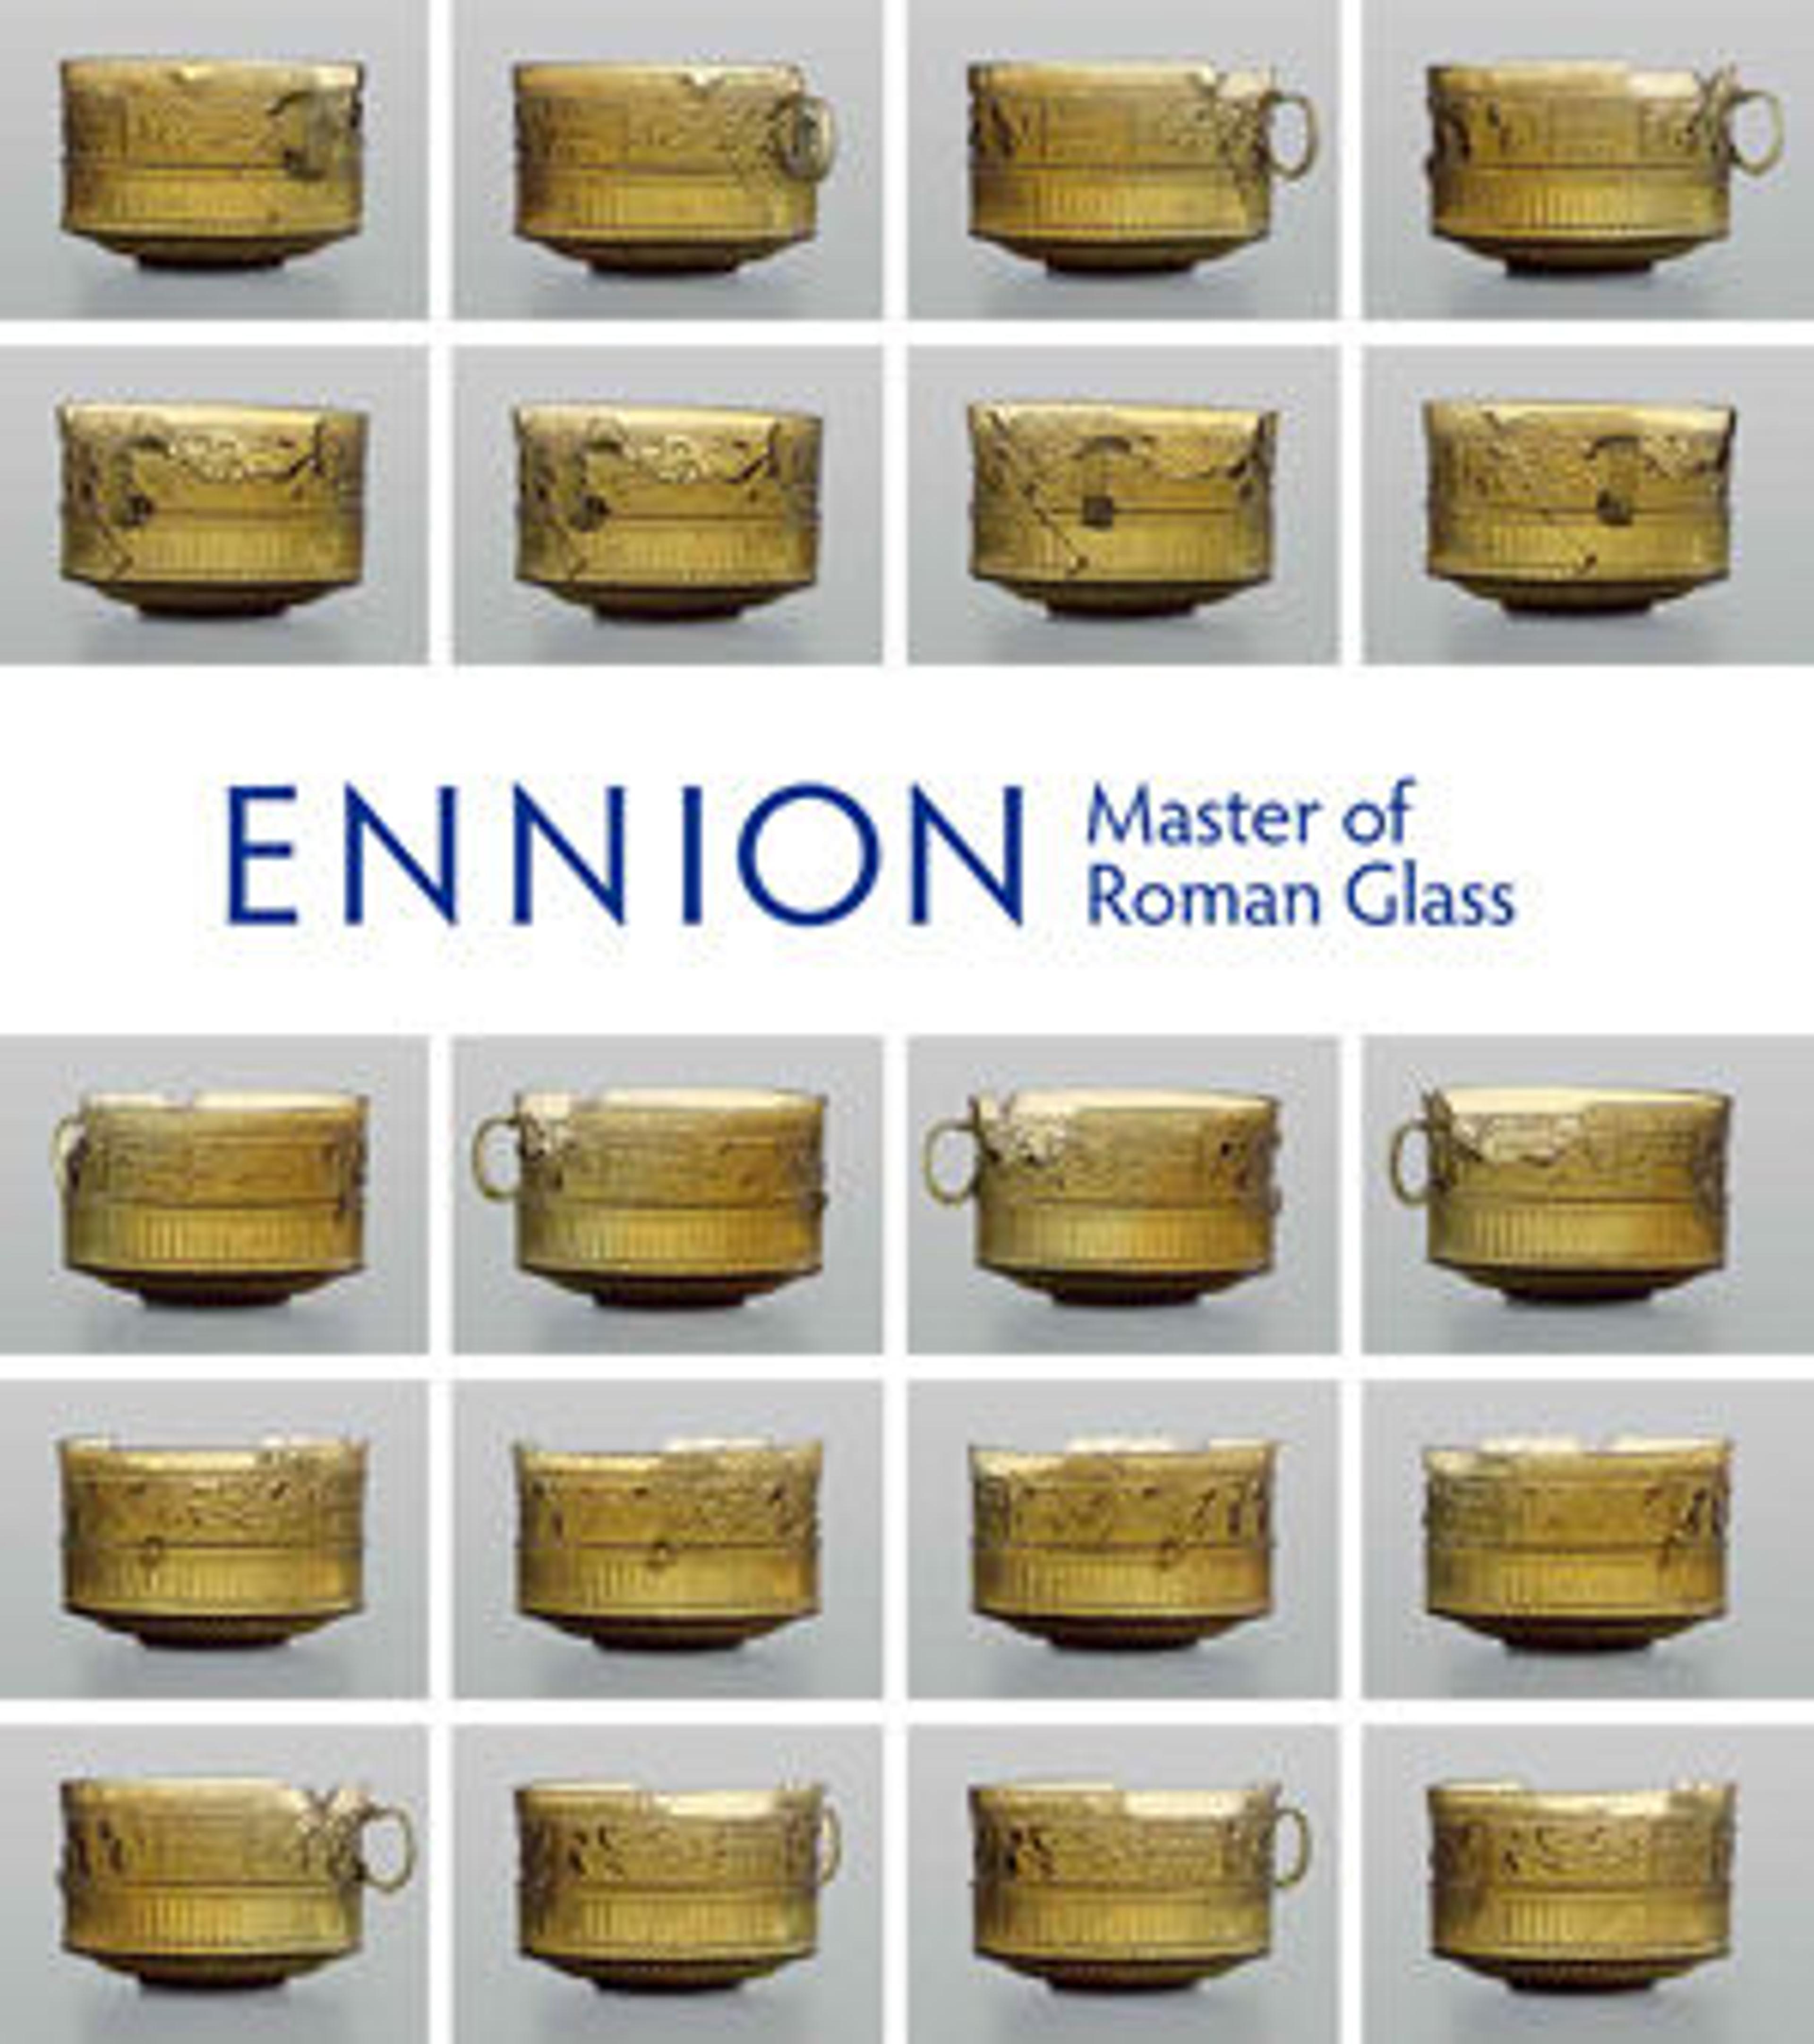 Ennion: Master of Roman Glass, by Christopher S. Lightfoot with contributions from Zrinka Buljević, Yael Israeli, Karol B. Wight, and Mark T. Wypyski